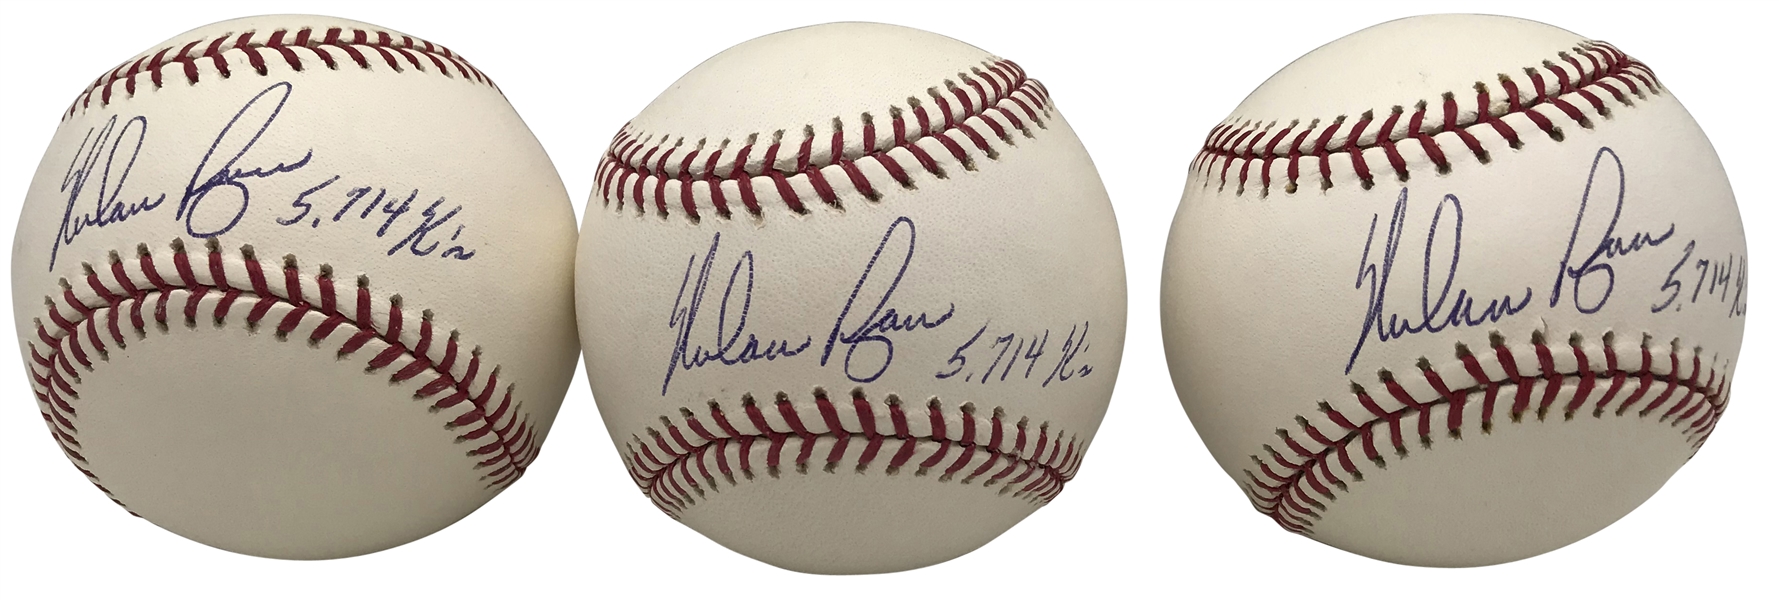 Nolan Ryan Lot of Three (3) Signed & Inscribed "5714 Ks" OML Baseballs (Beckett/BAS Guaranteed)